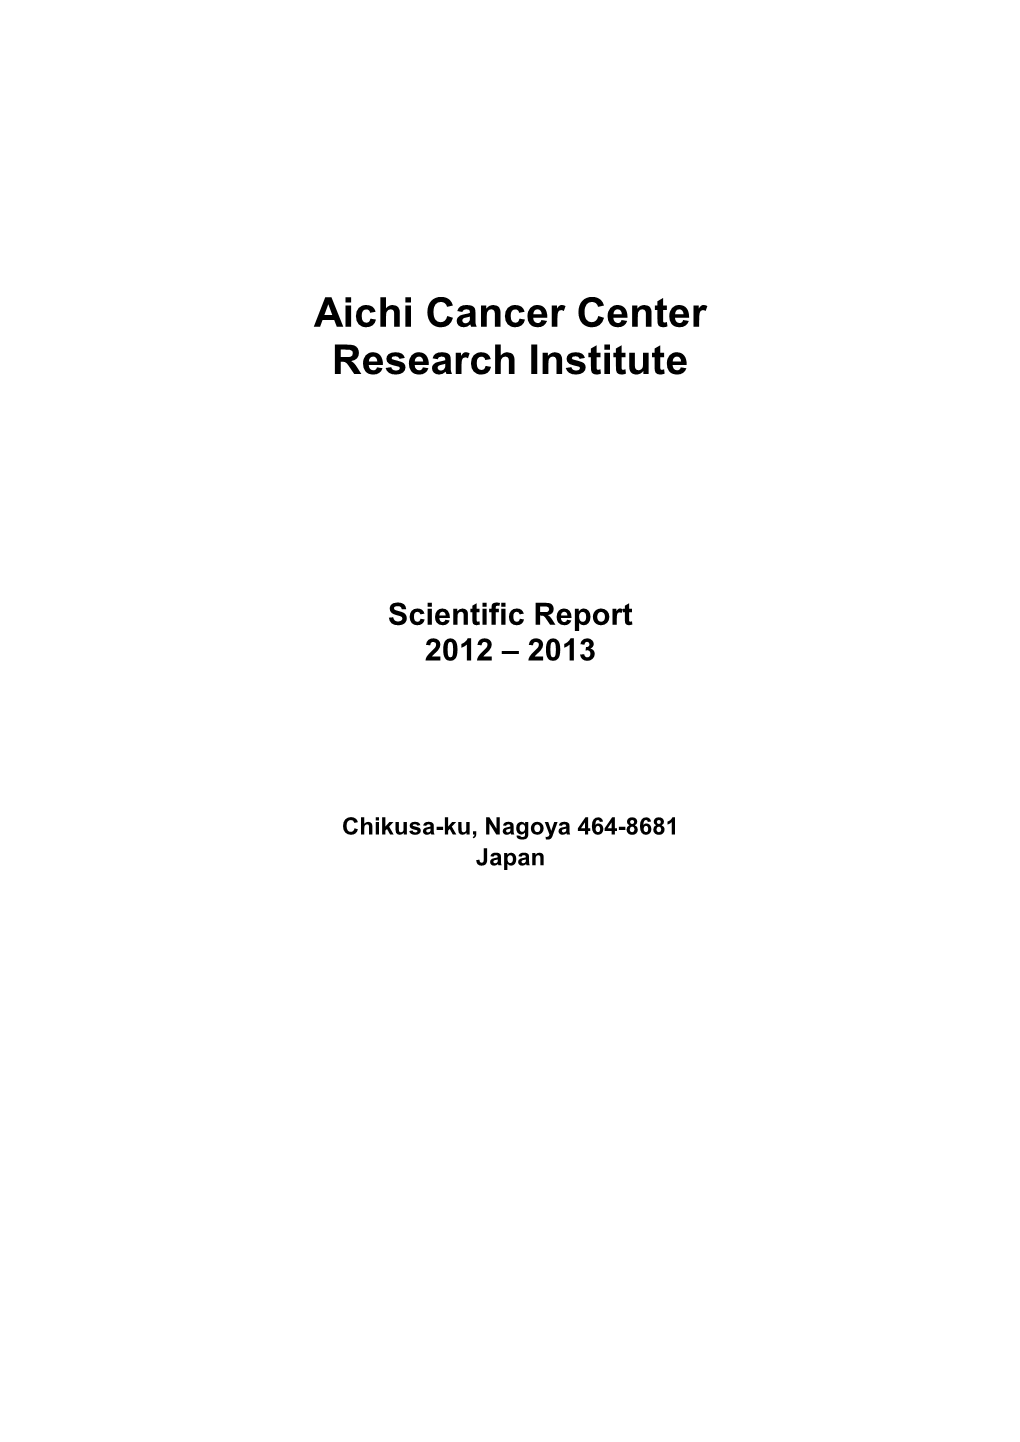 2012-2013) of the Aichi Cancer Center Research Institute